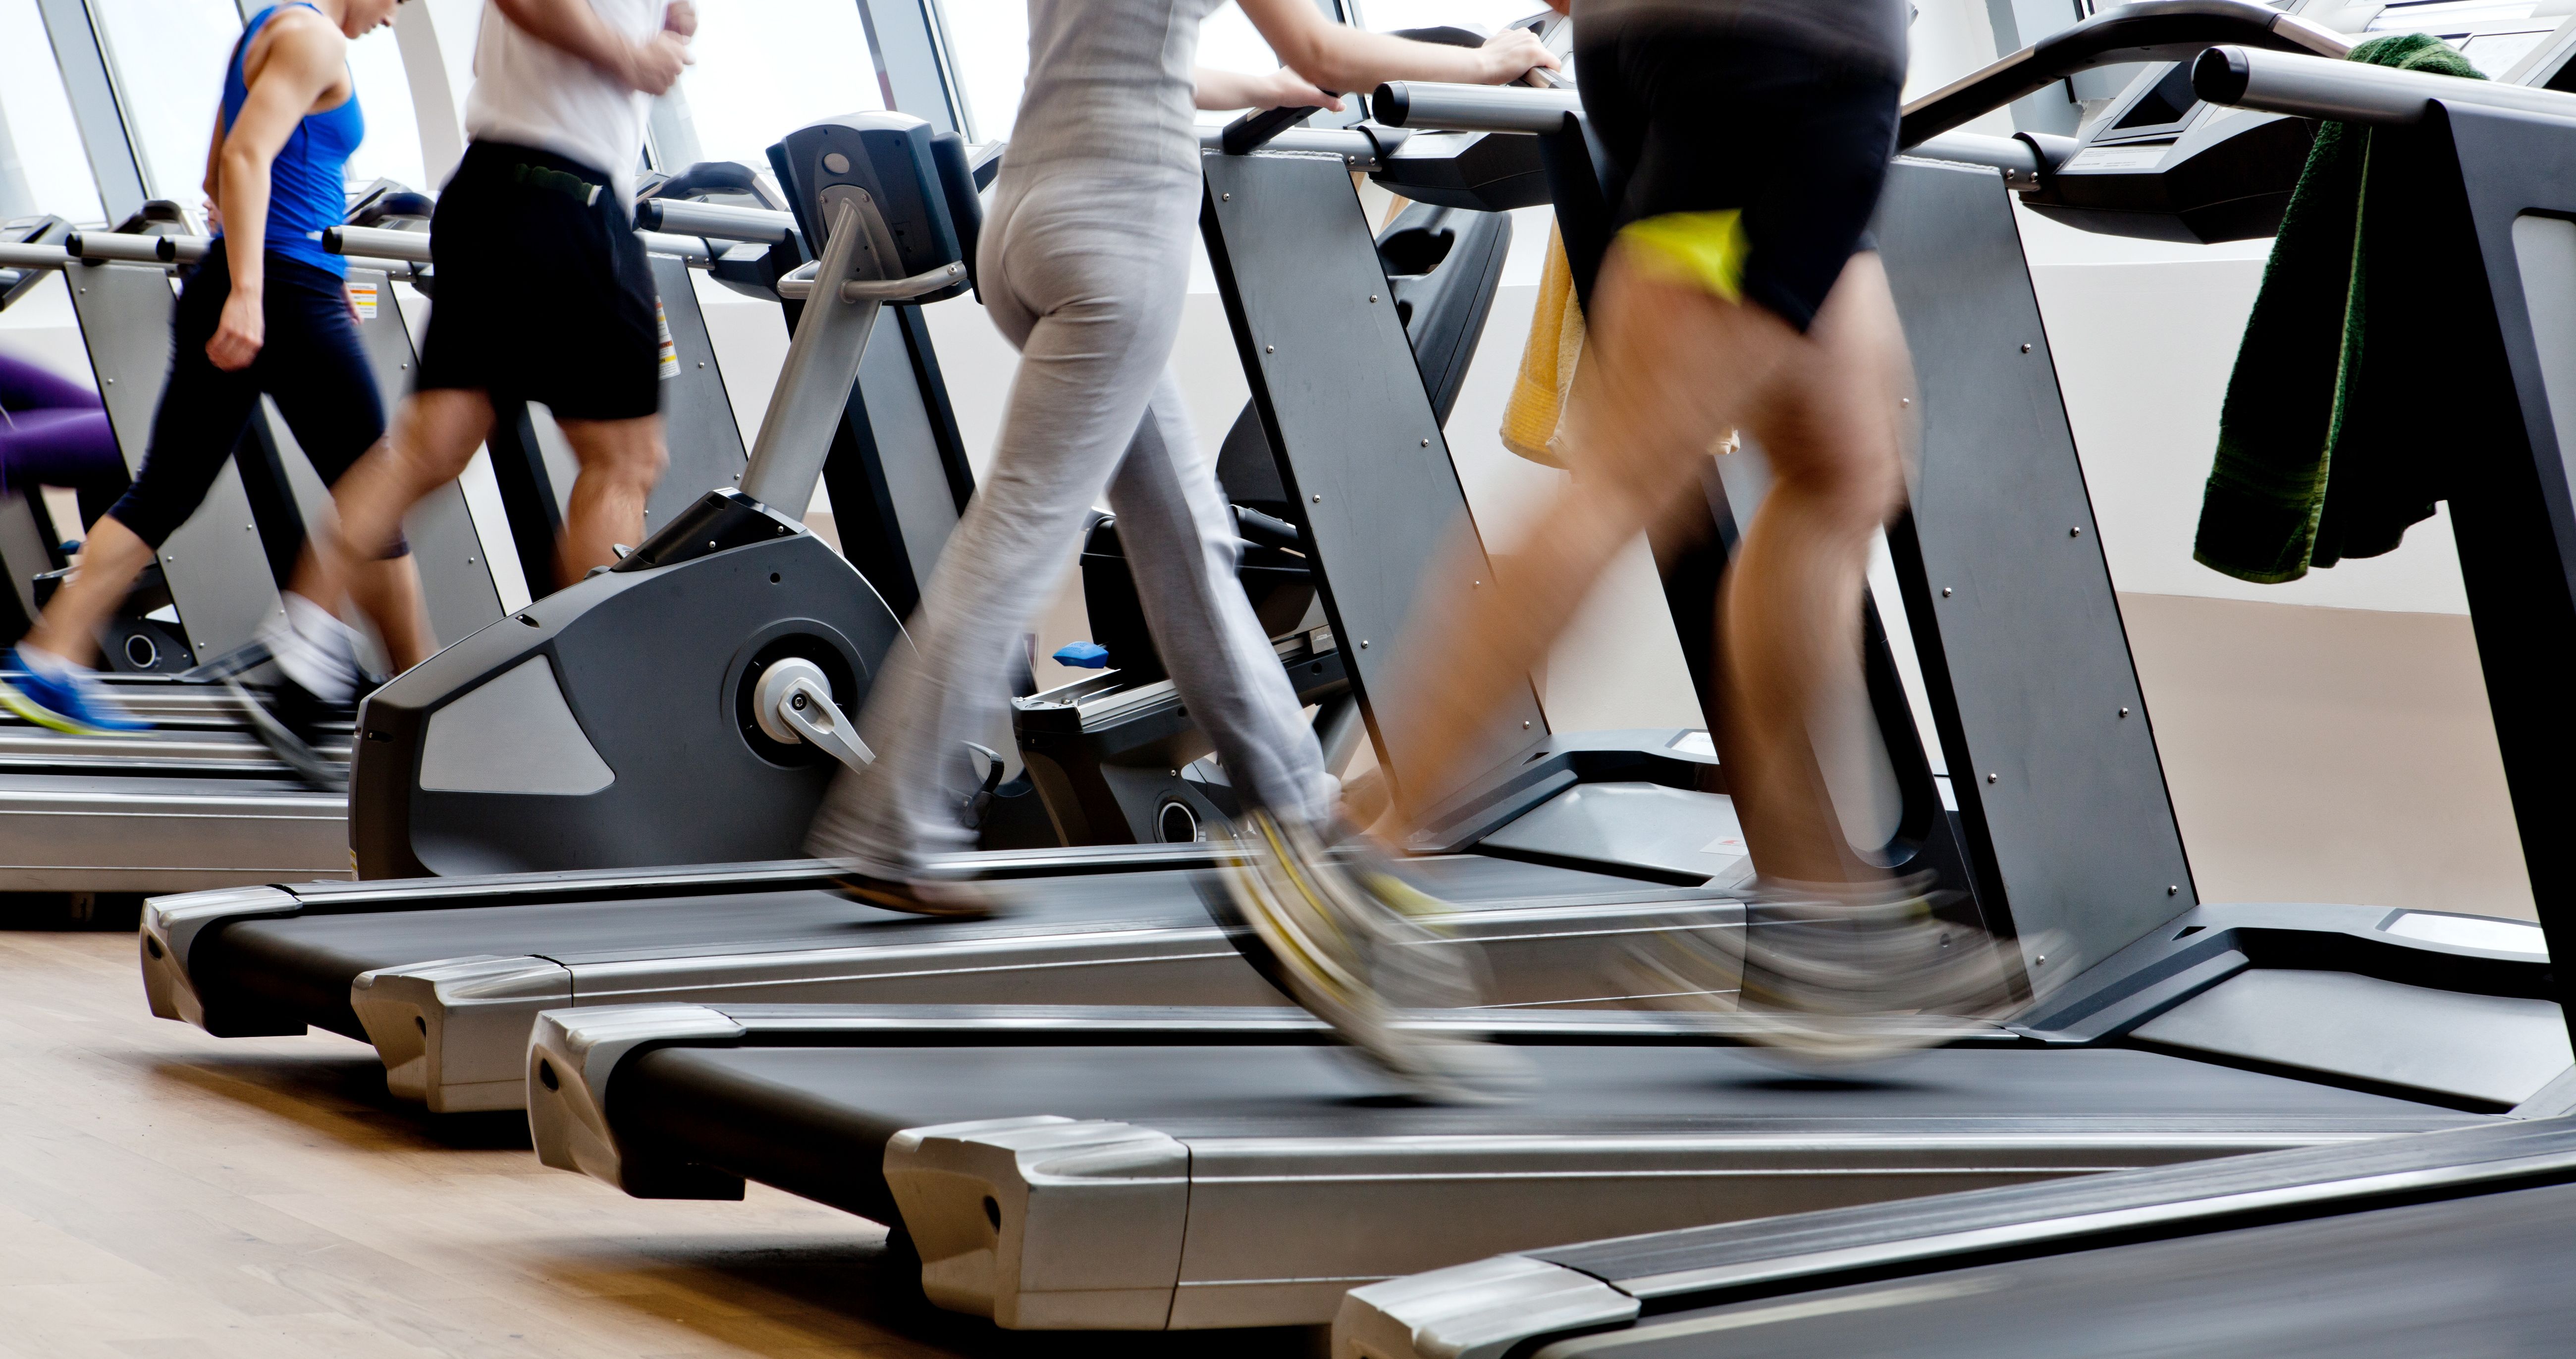 Children suffer from the dangers of treadmills